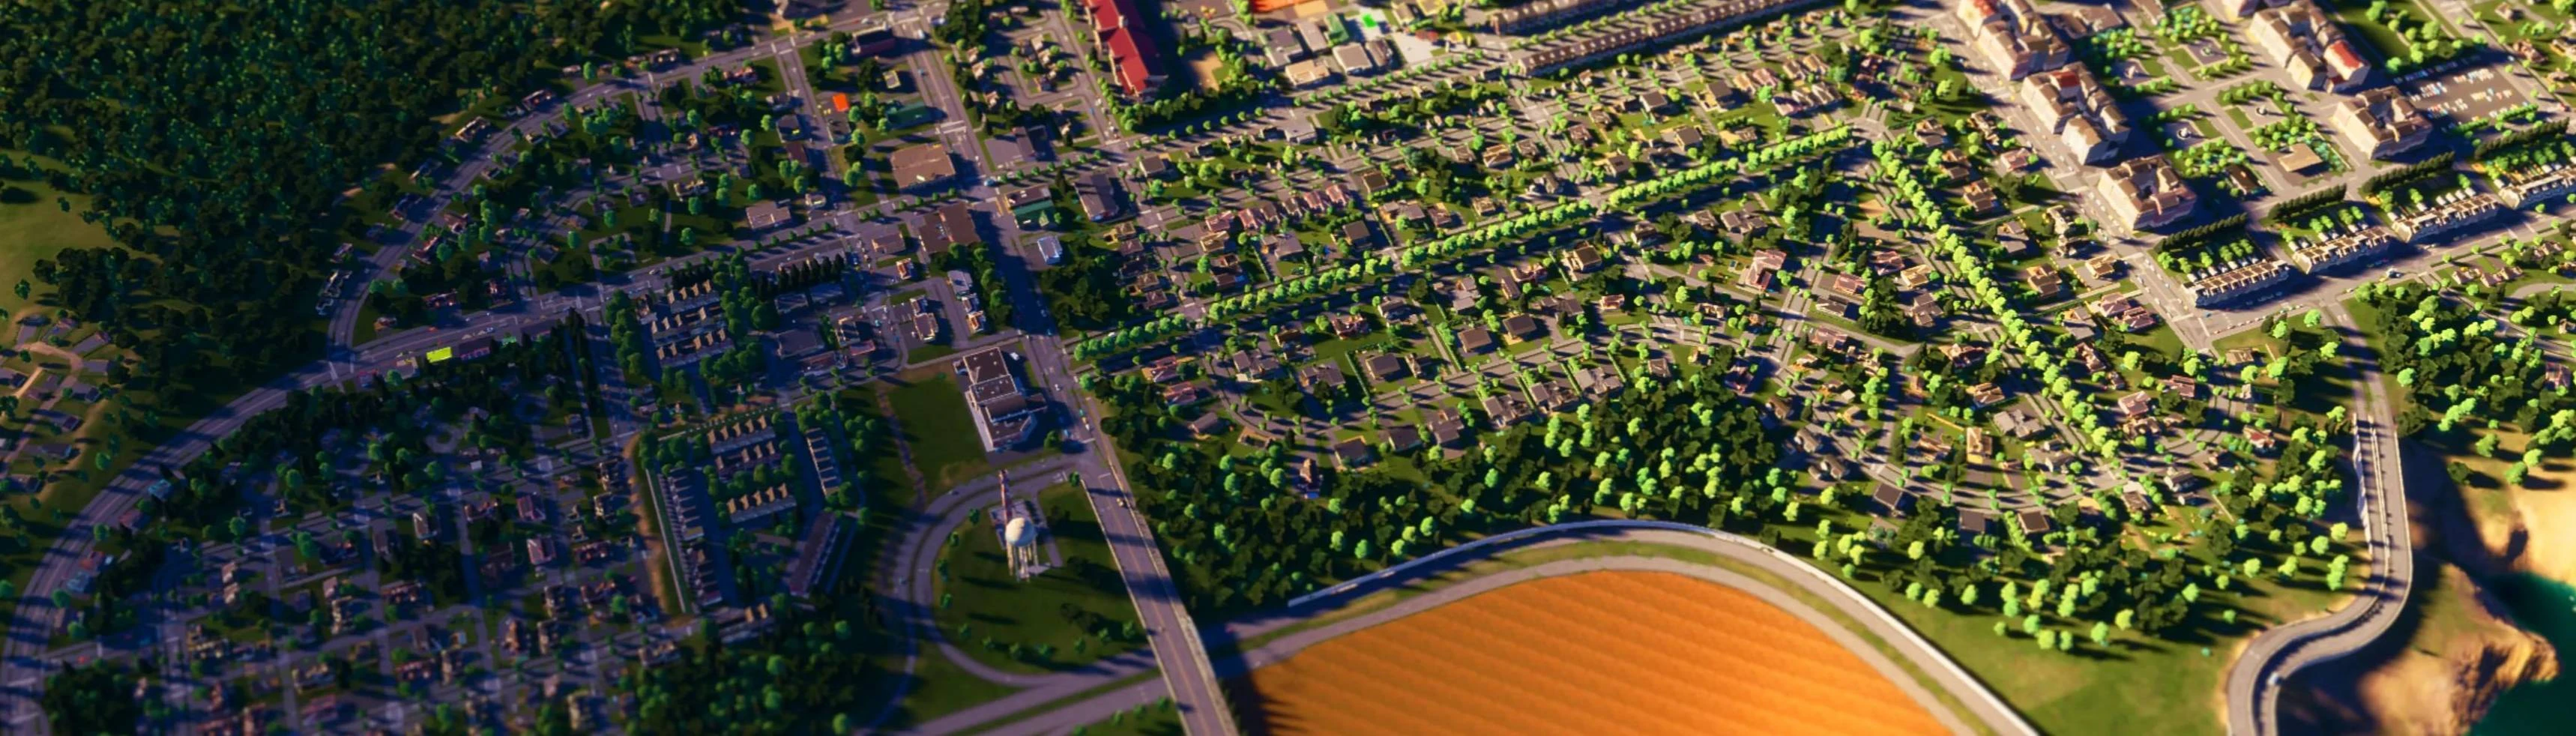 Cities: Skylines II Nexus - Mods and community